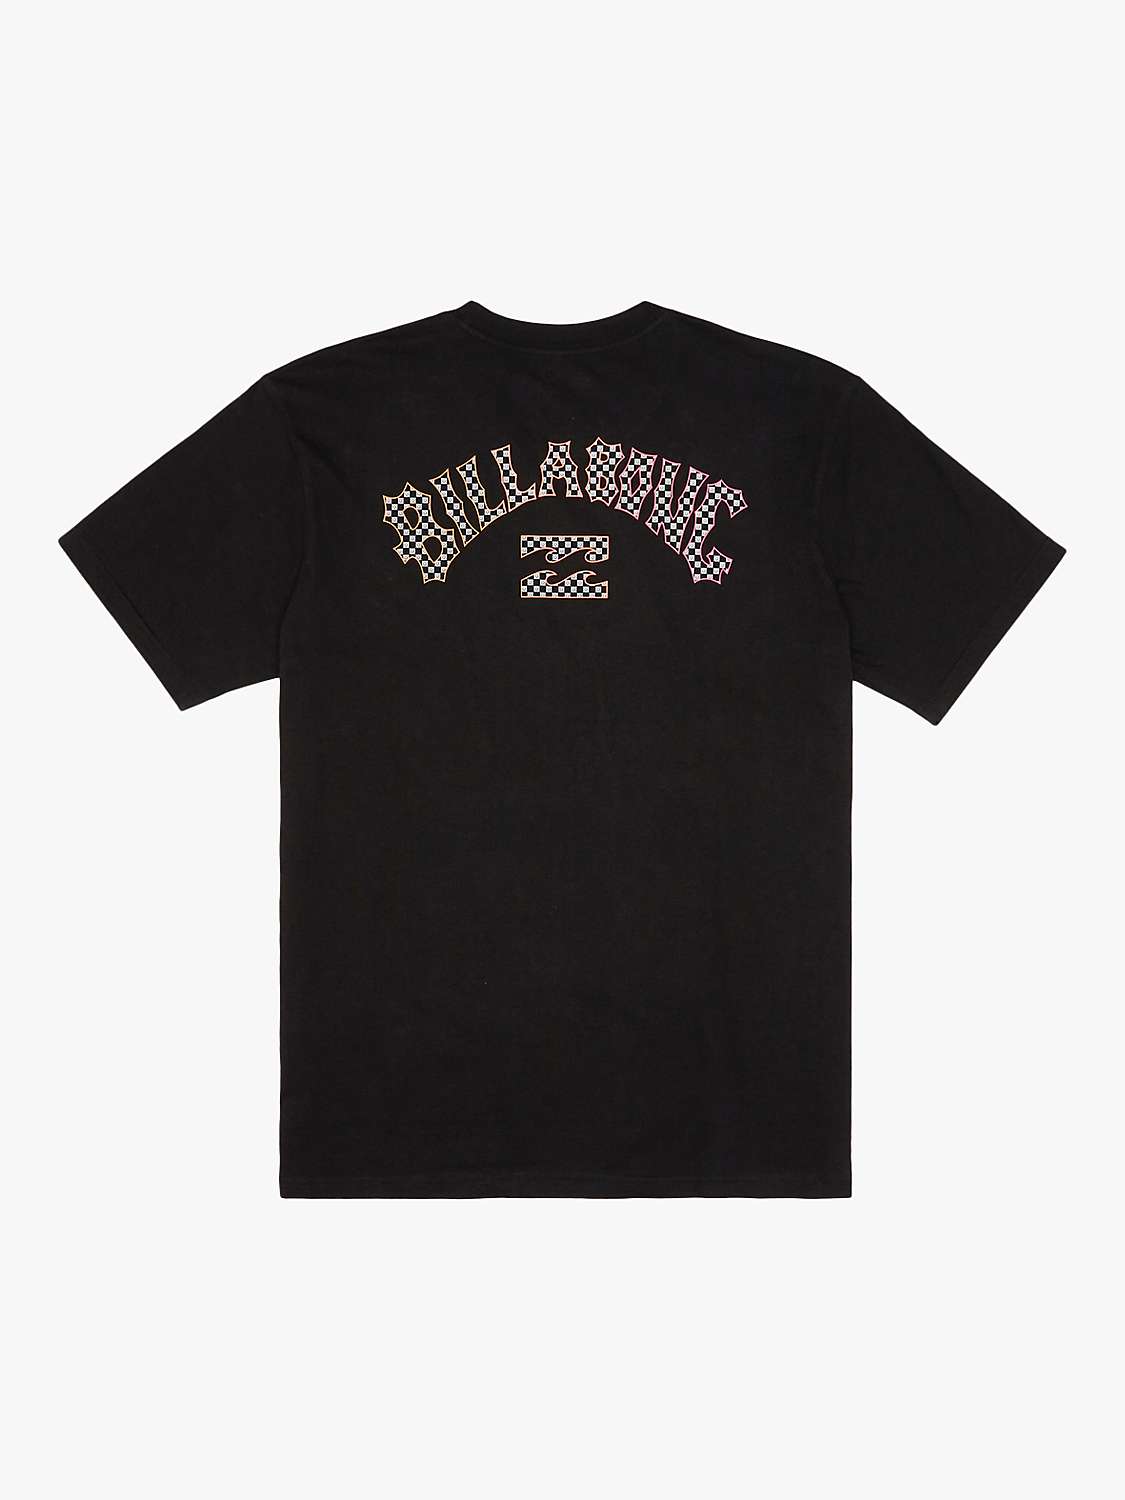 Buy Billabong Kids' Arch Short Sleeve T-Shirt, Black Online at johnlewis.com